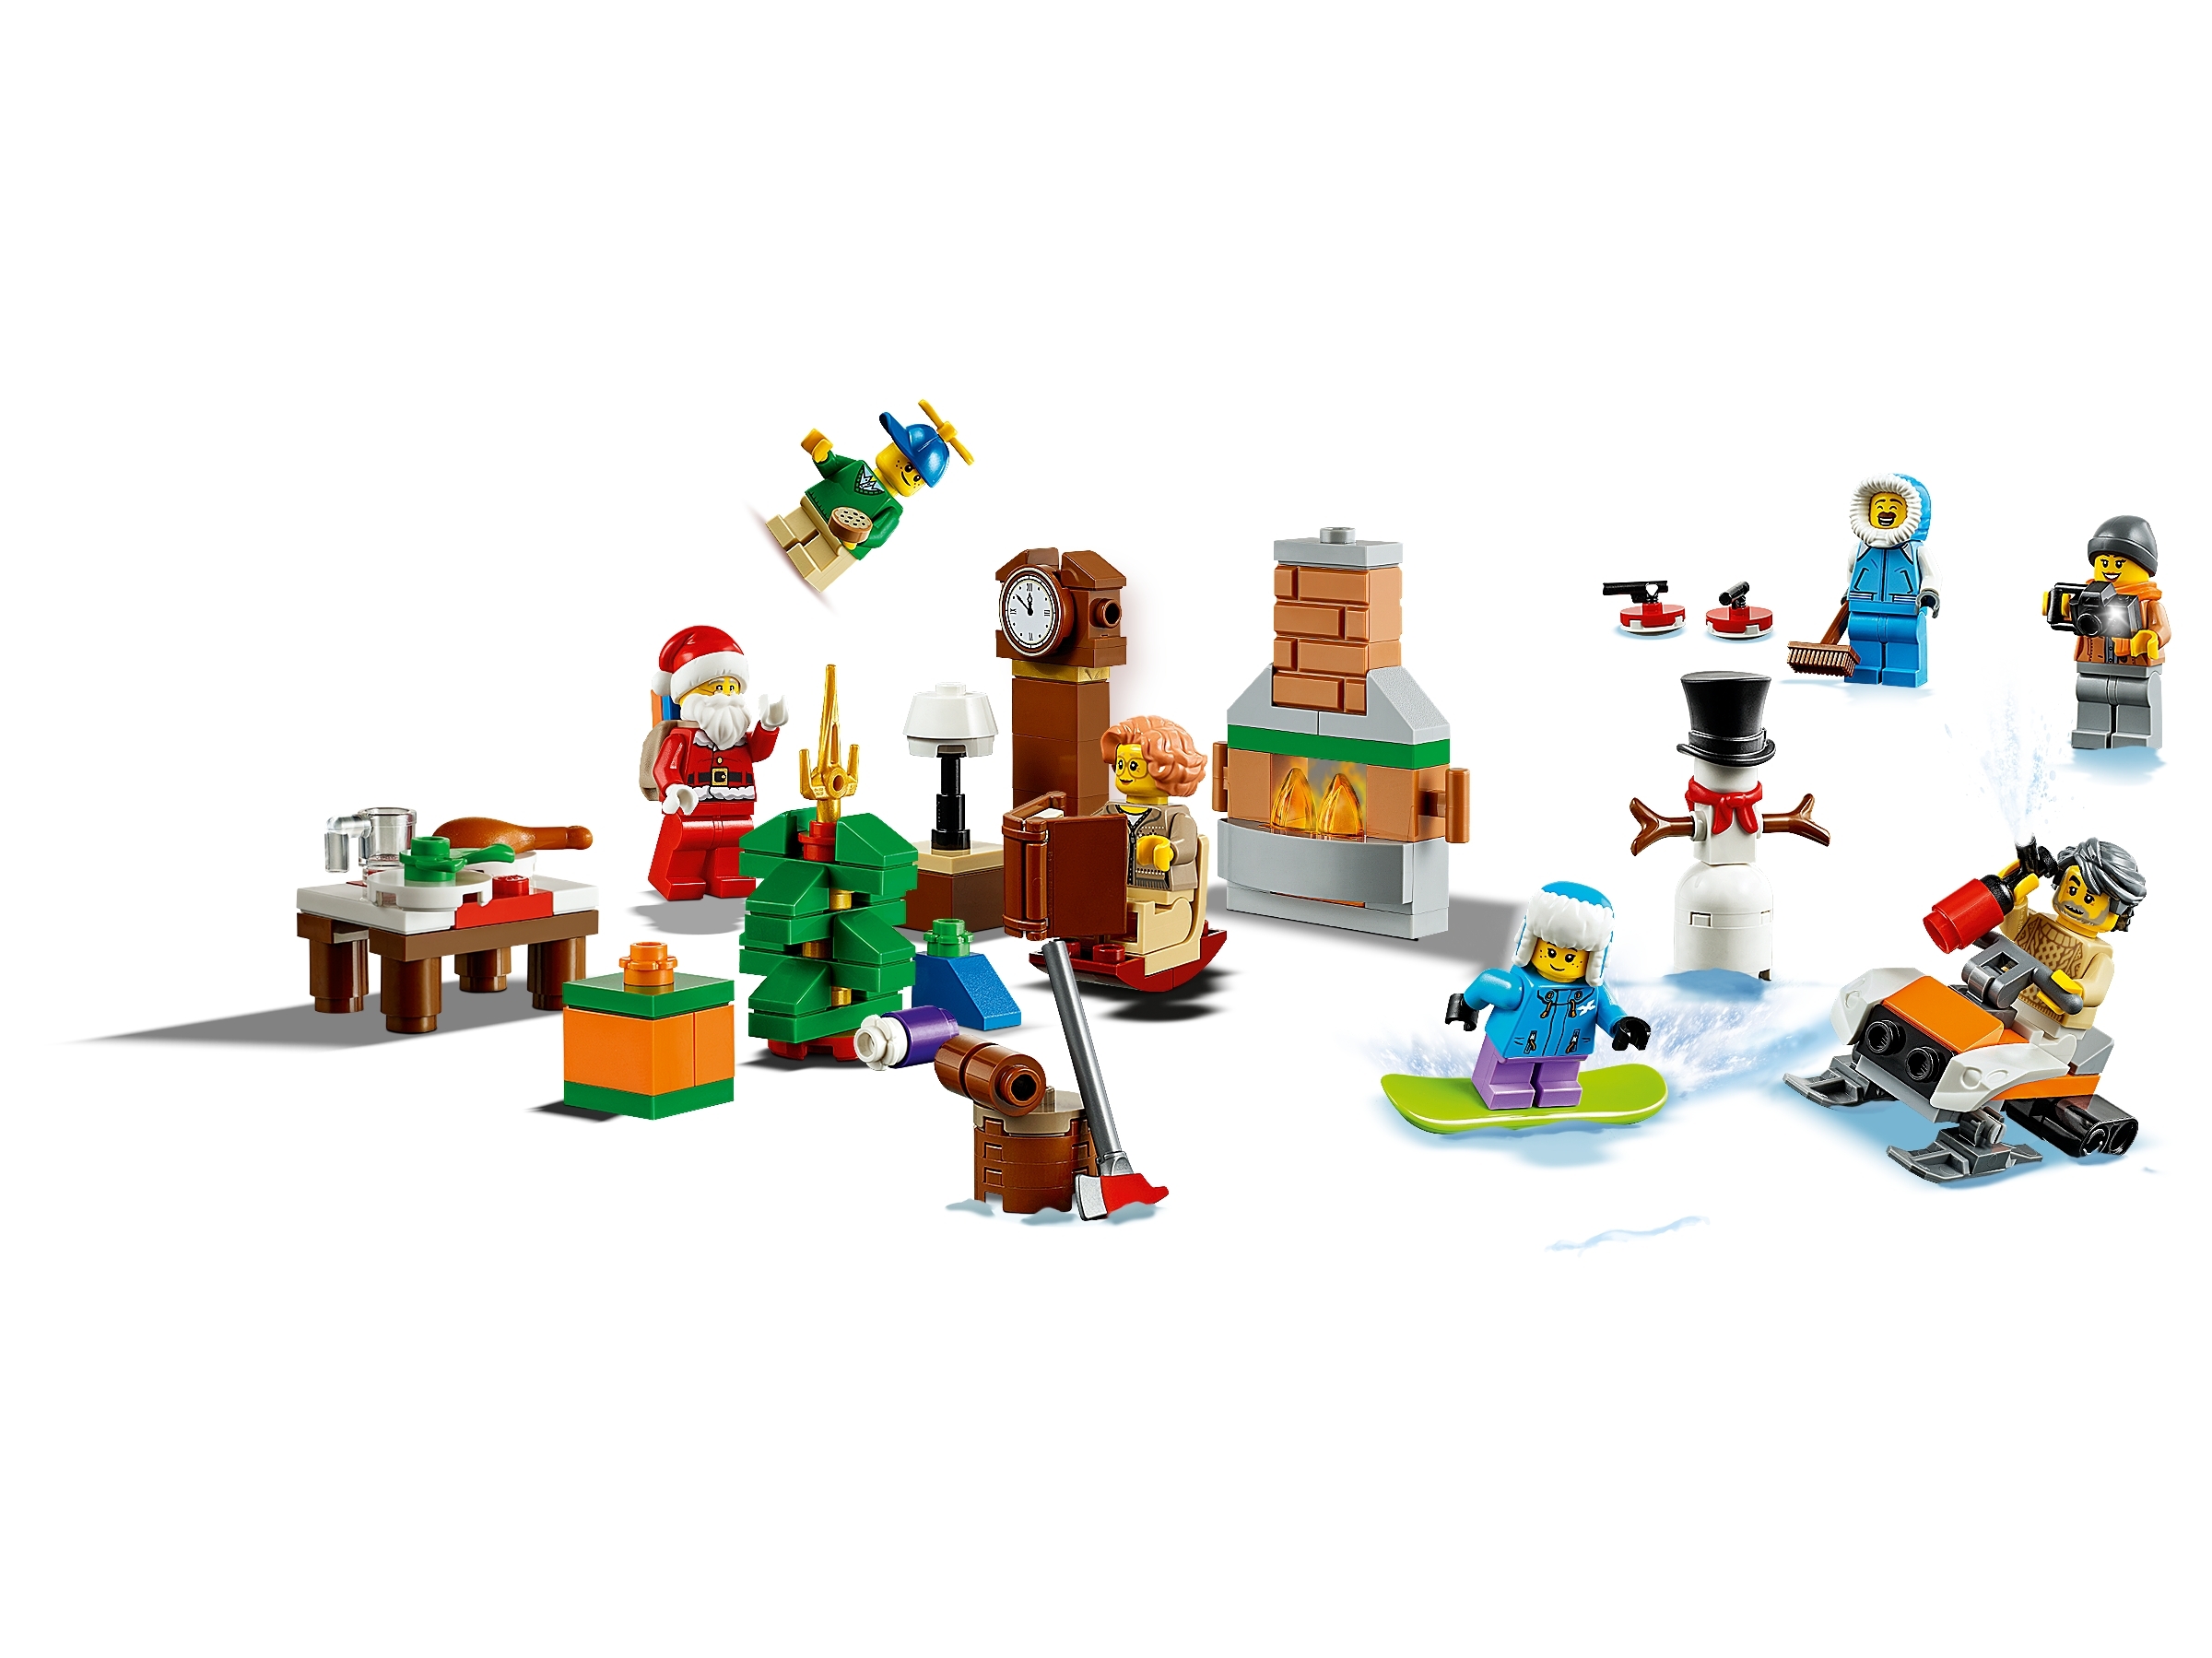 Lego City Advent Calendar 2019 vlr eng br